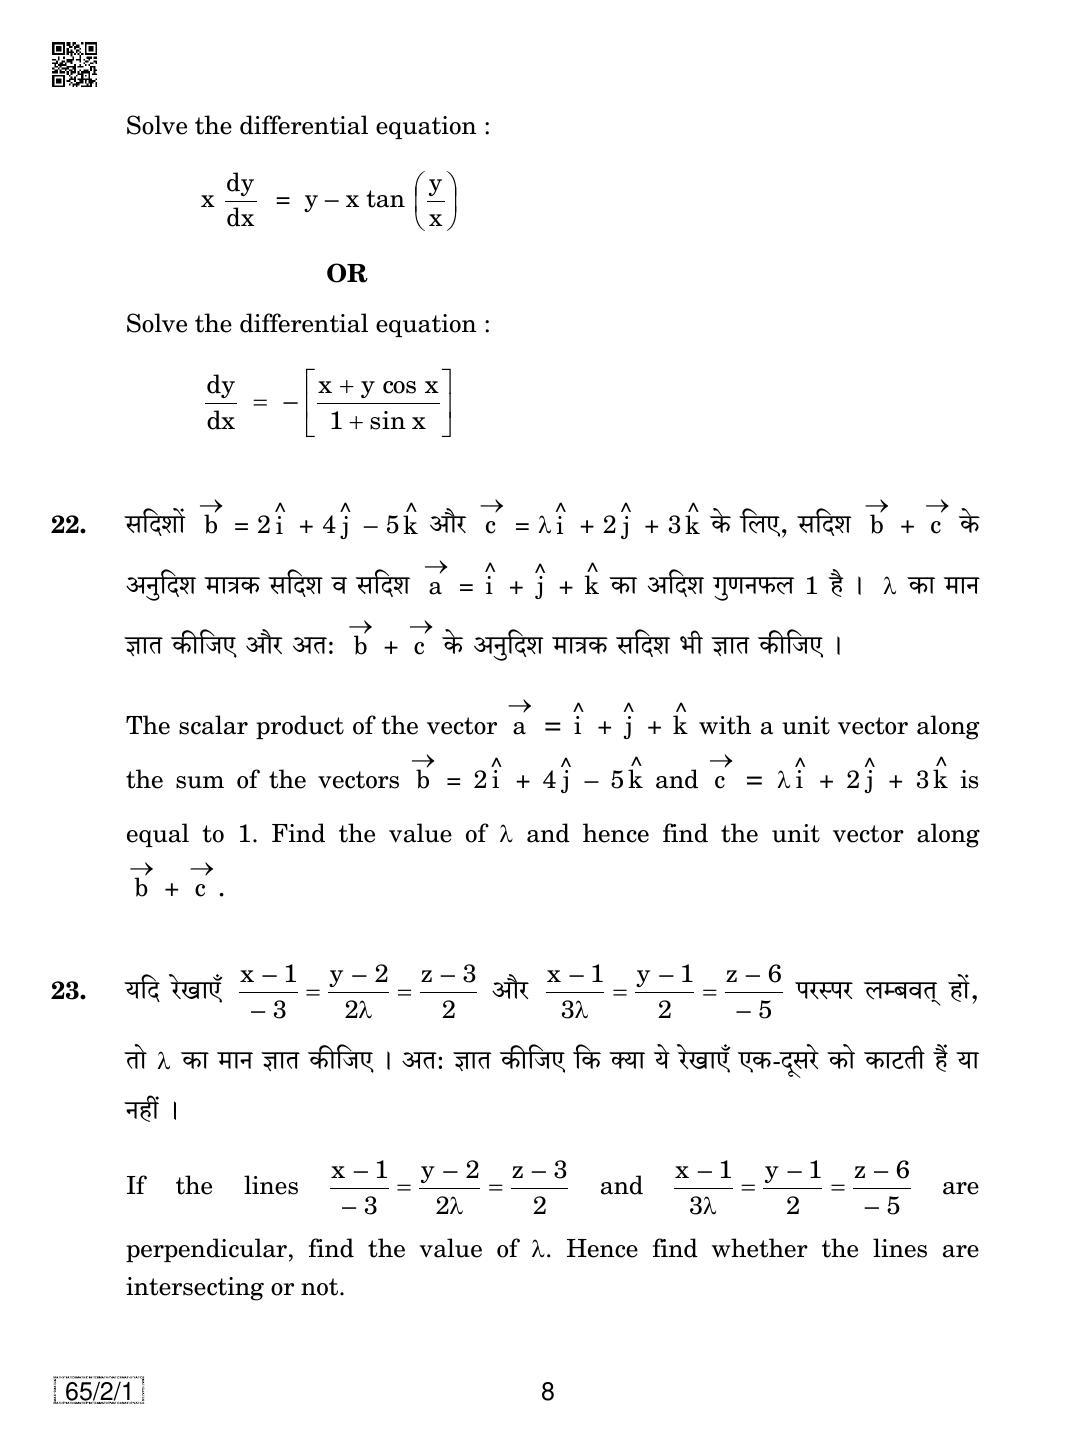 CBSE Class 12 65-2-1 Mathematics 2019 Question Paper - Page 8